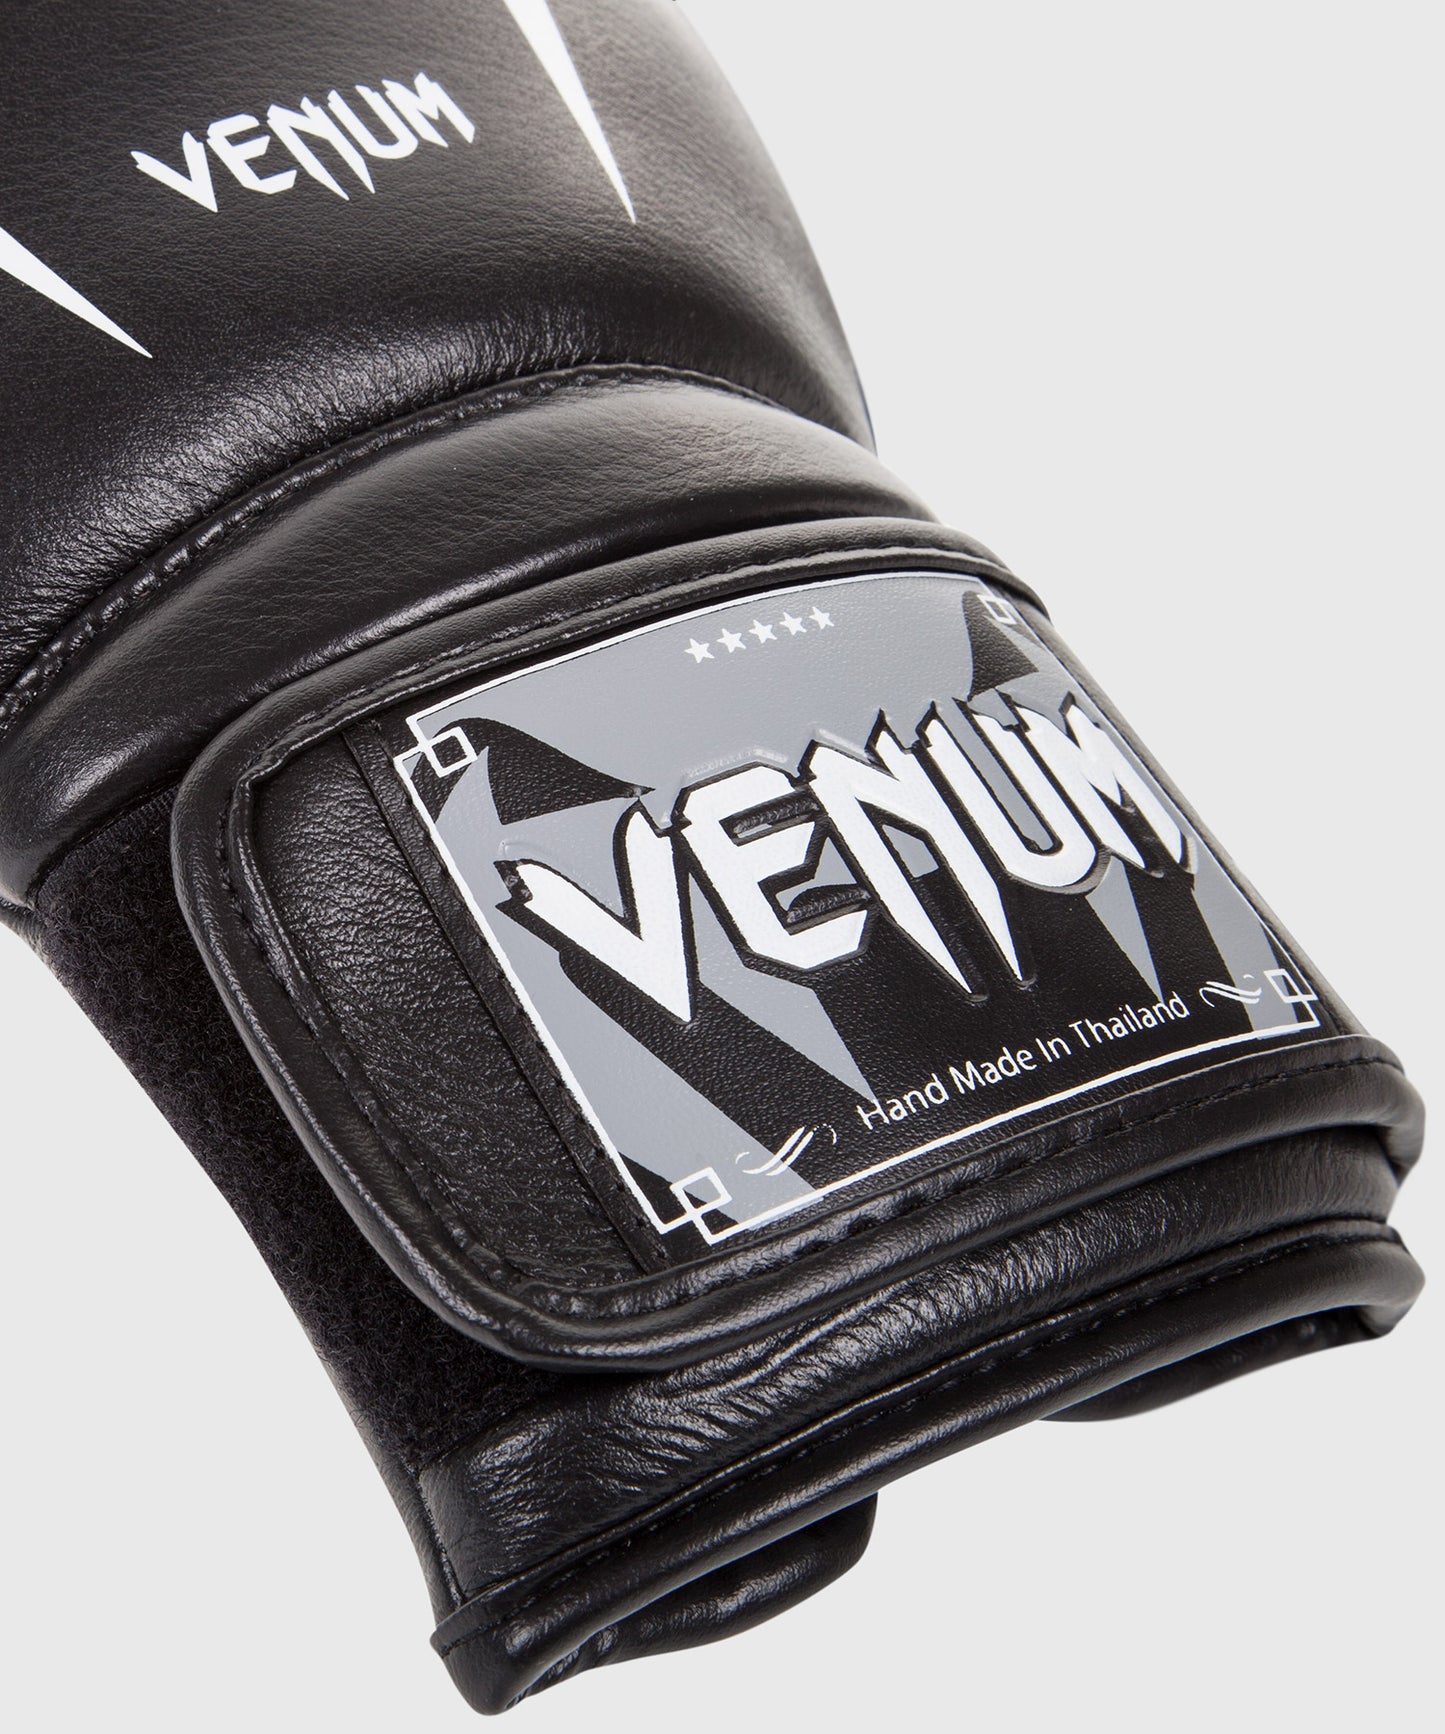 Venum Giant 3.0 Boxhandschuhe - Schwarz